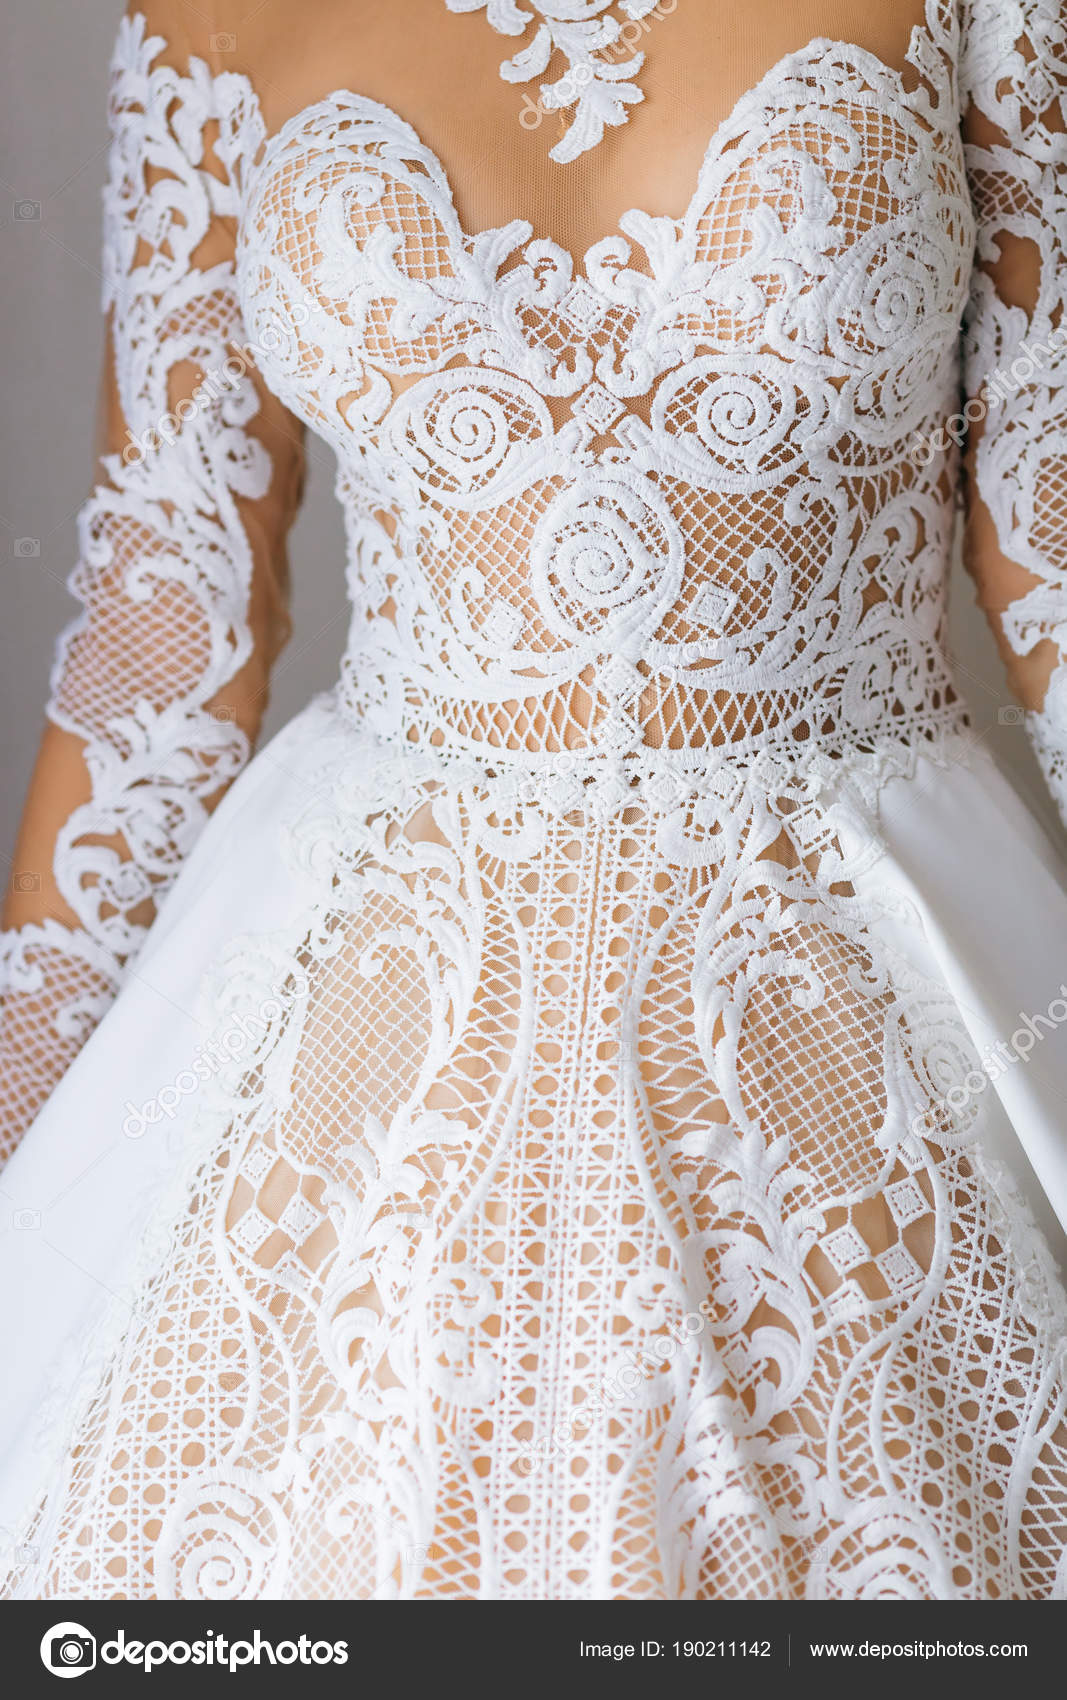 thin white dress